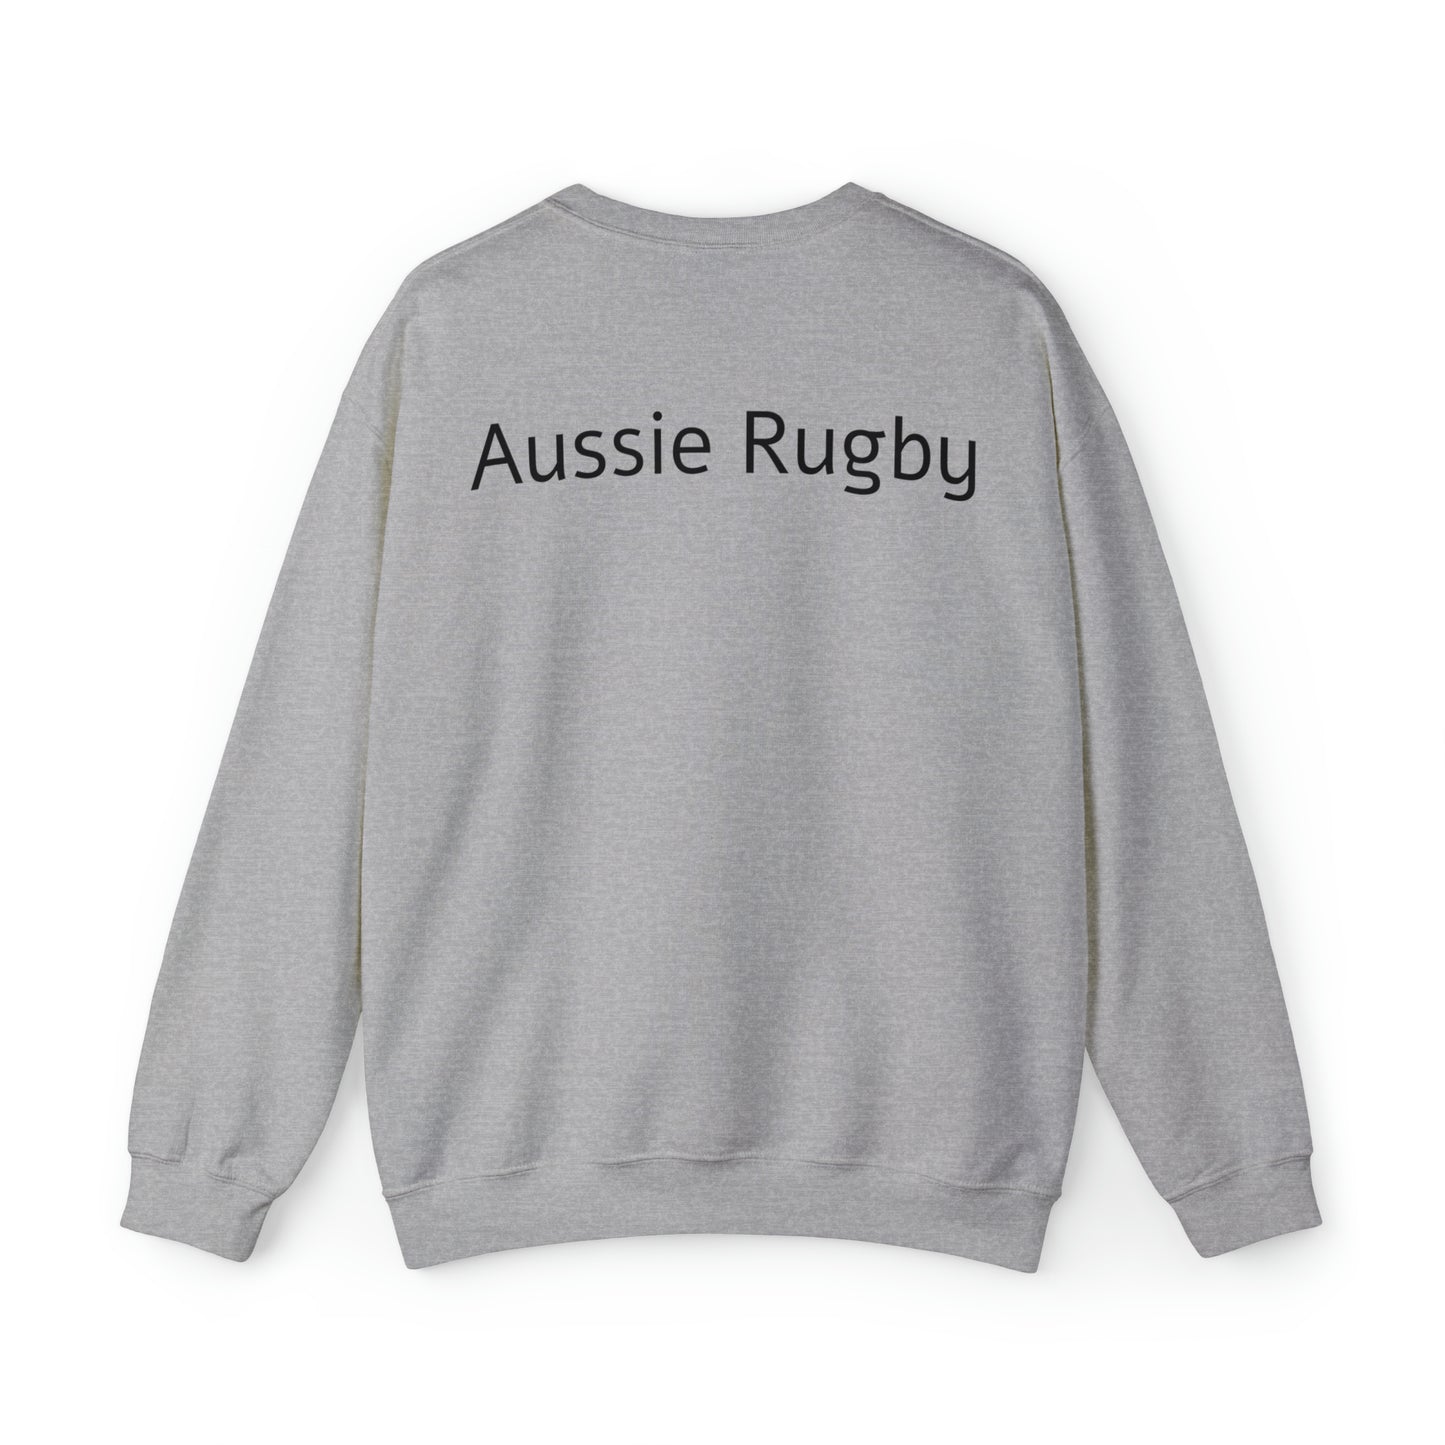 Australia lifting RWC - light sweatshirt